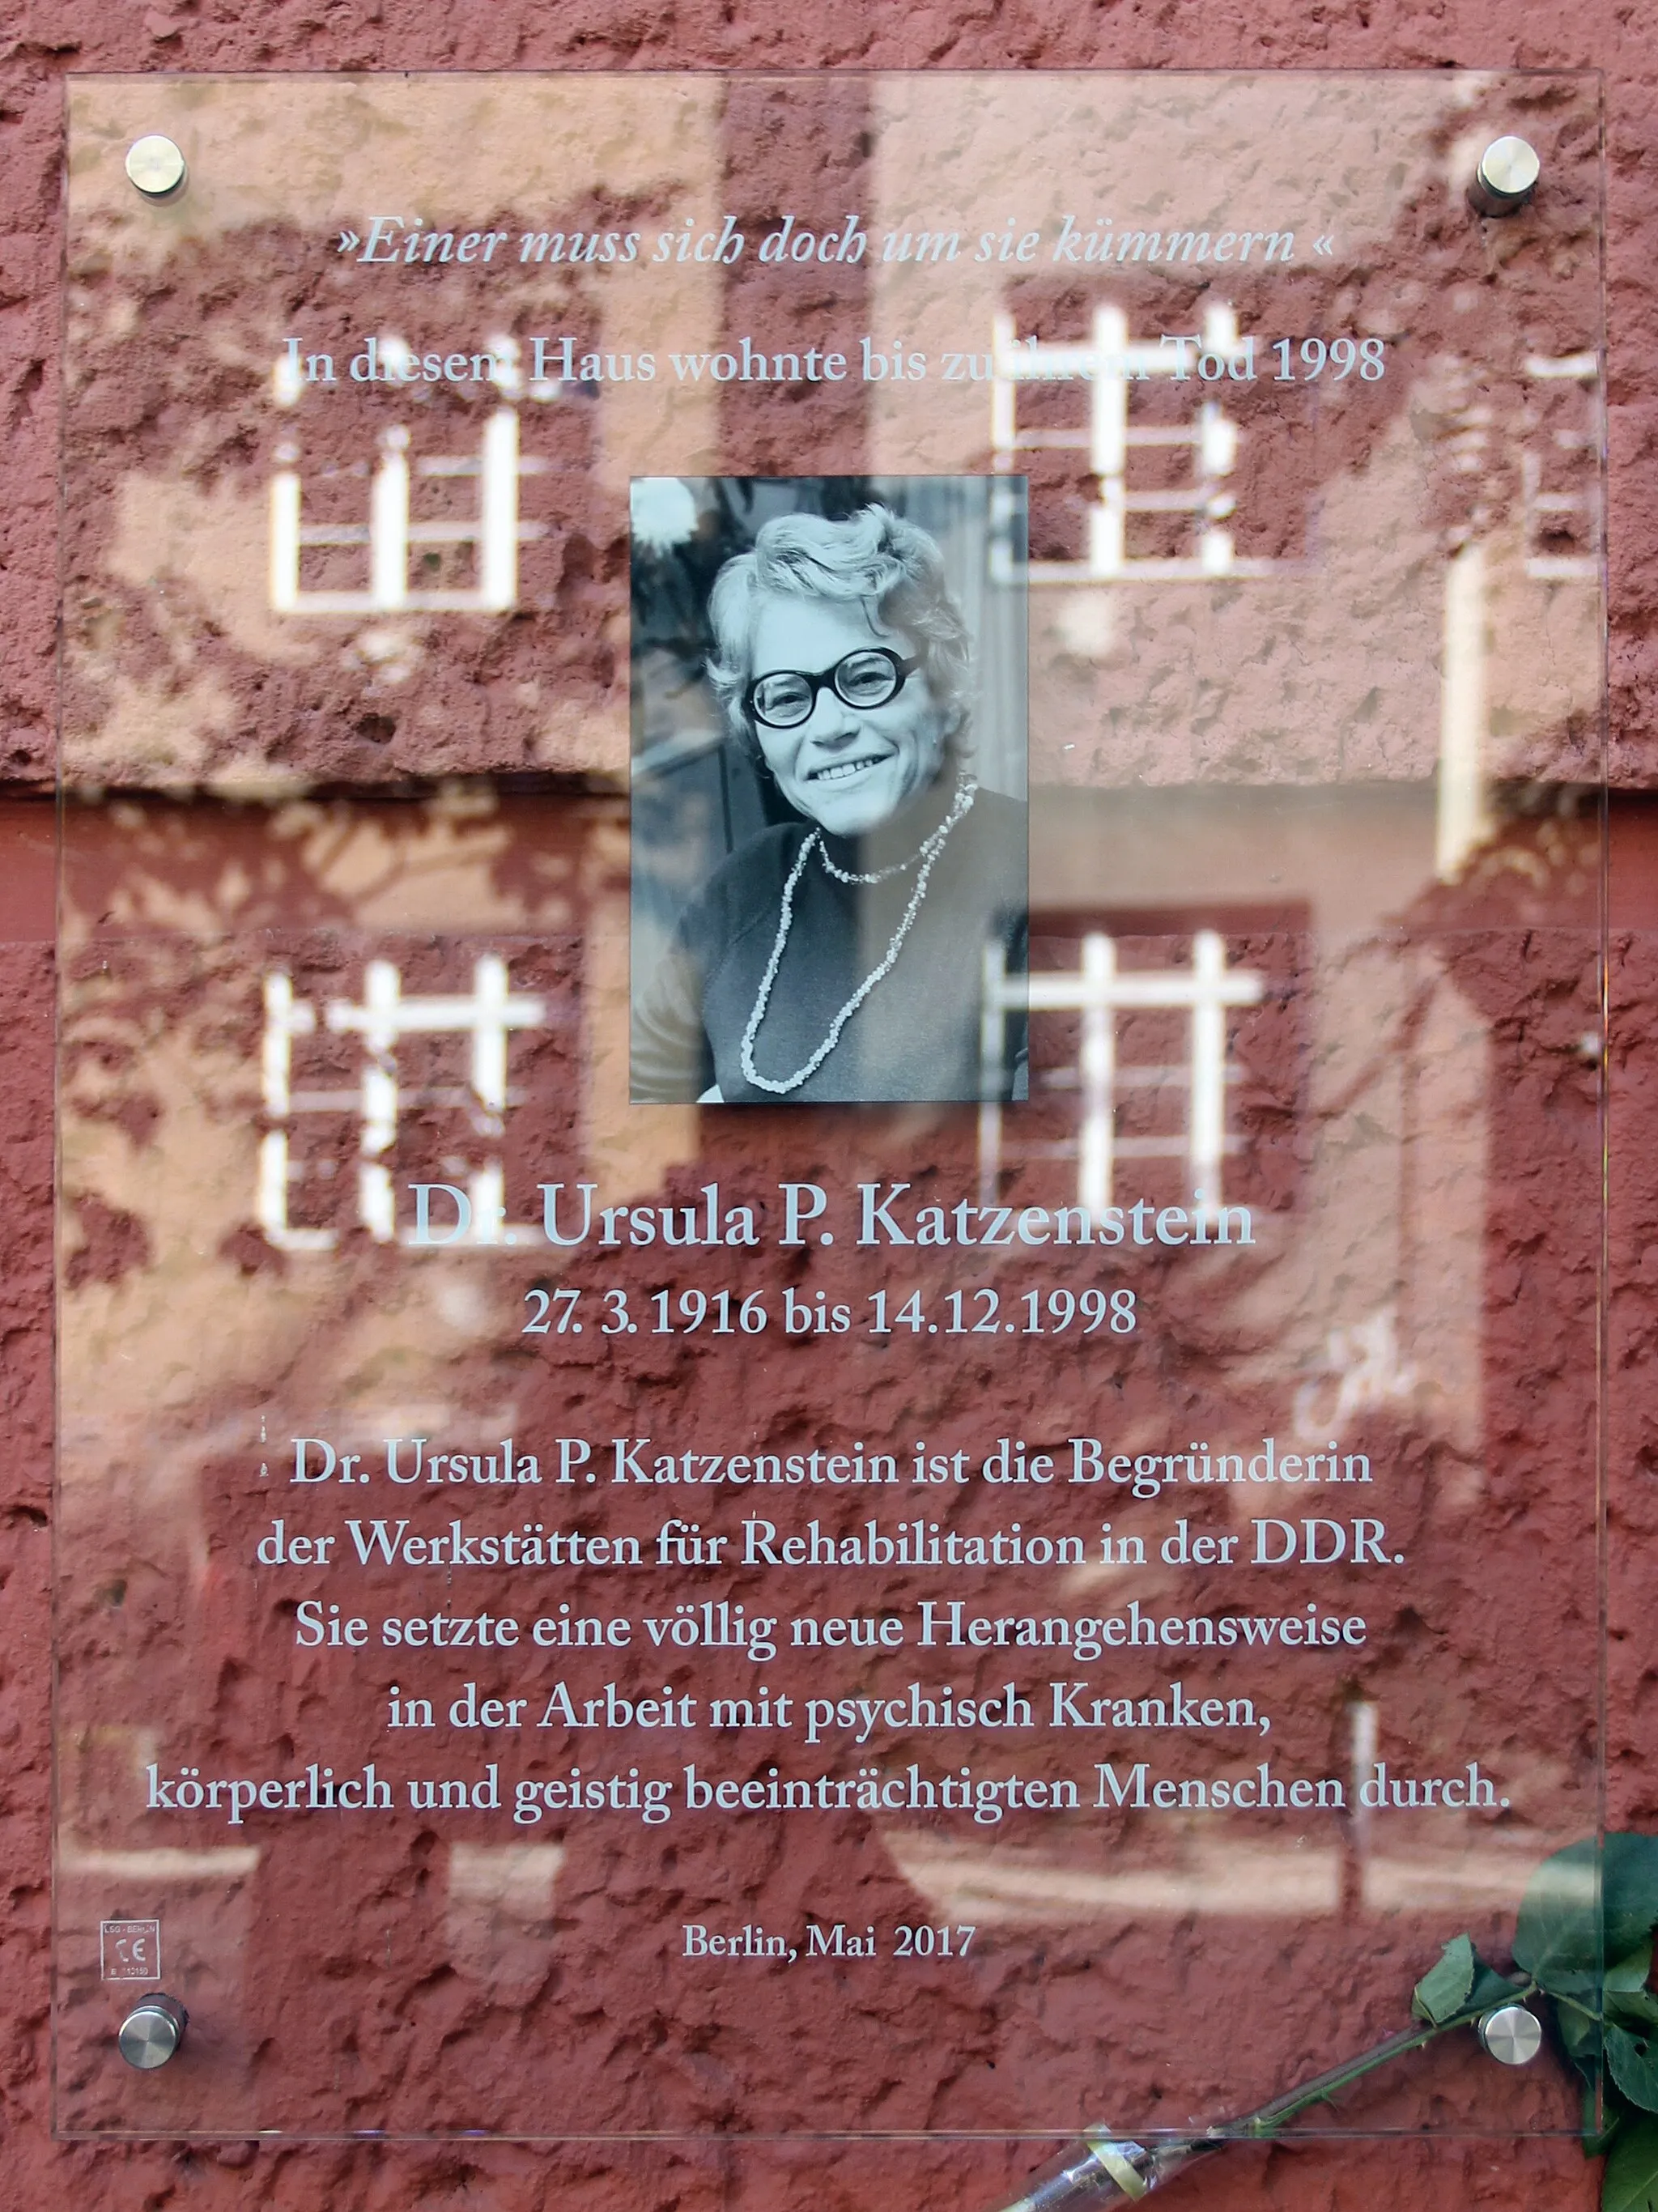 Photo showing: Memorial plaque, Ursula Katzenstein, Kavalierstraße 6, Berlin-Pankow, Deutschland